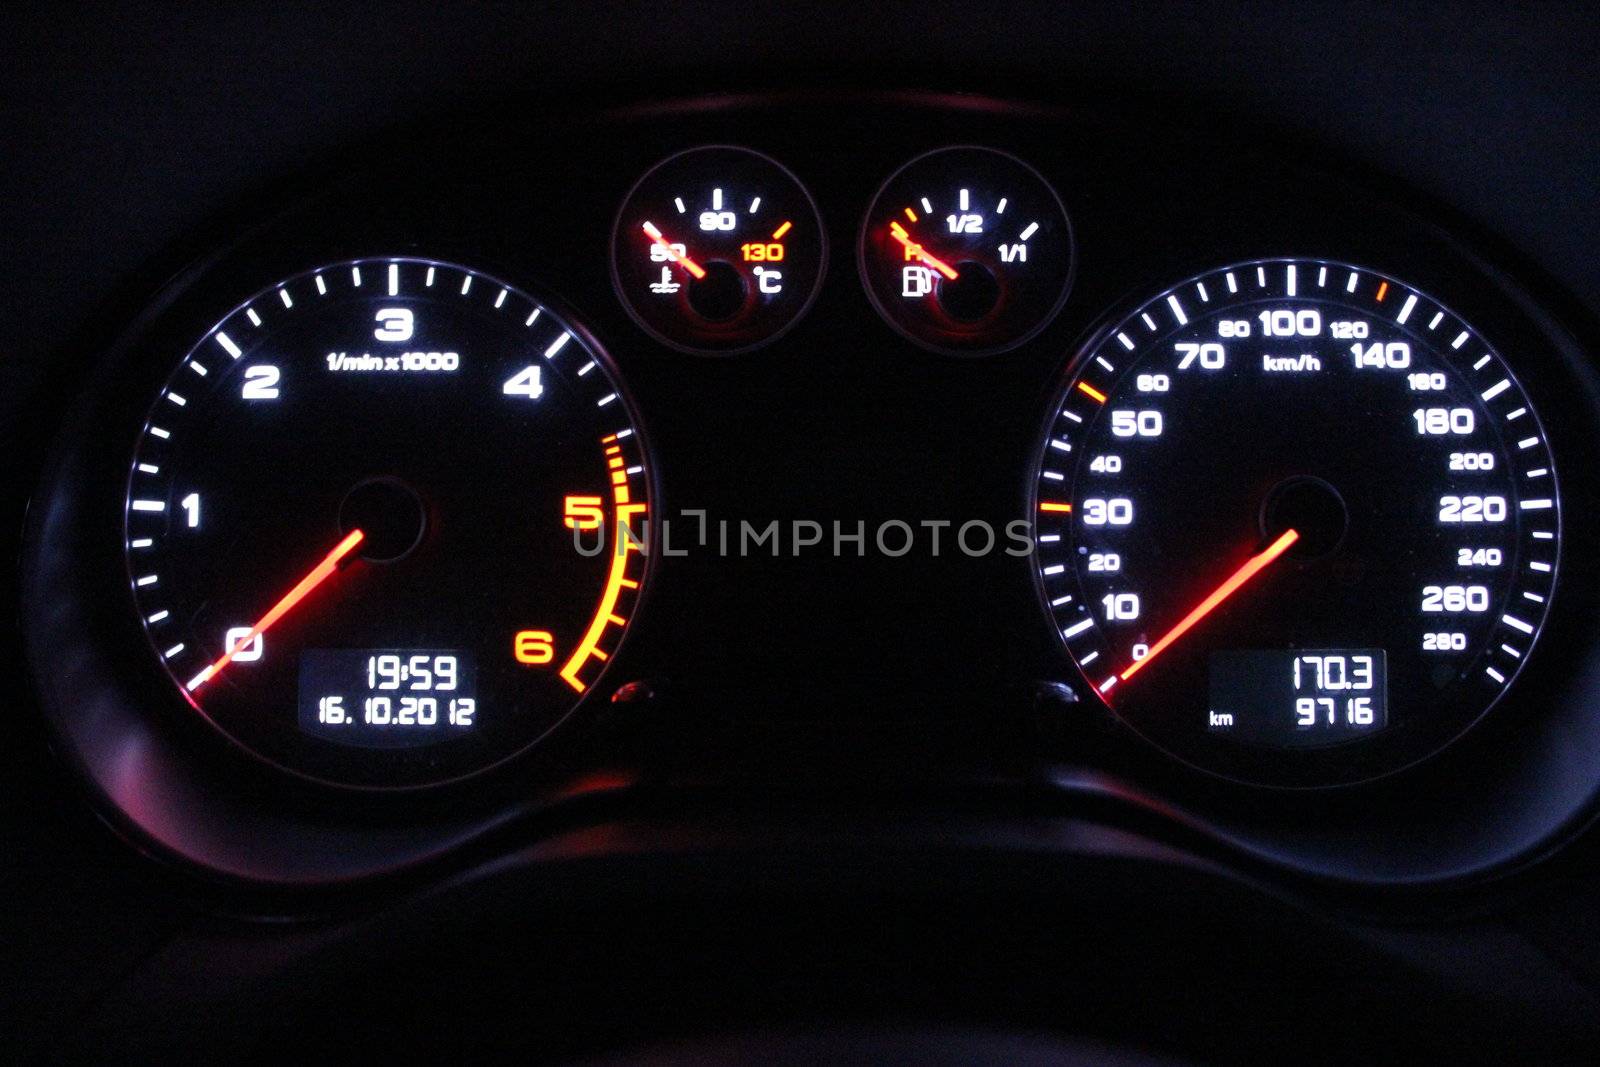 Speedometer of the car